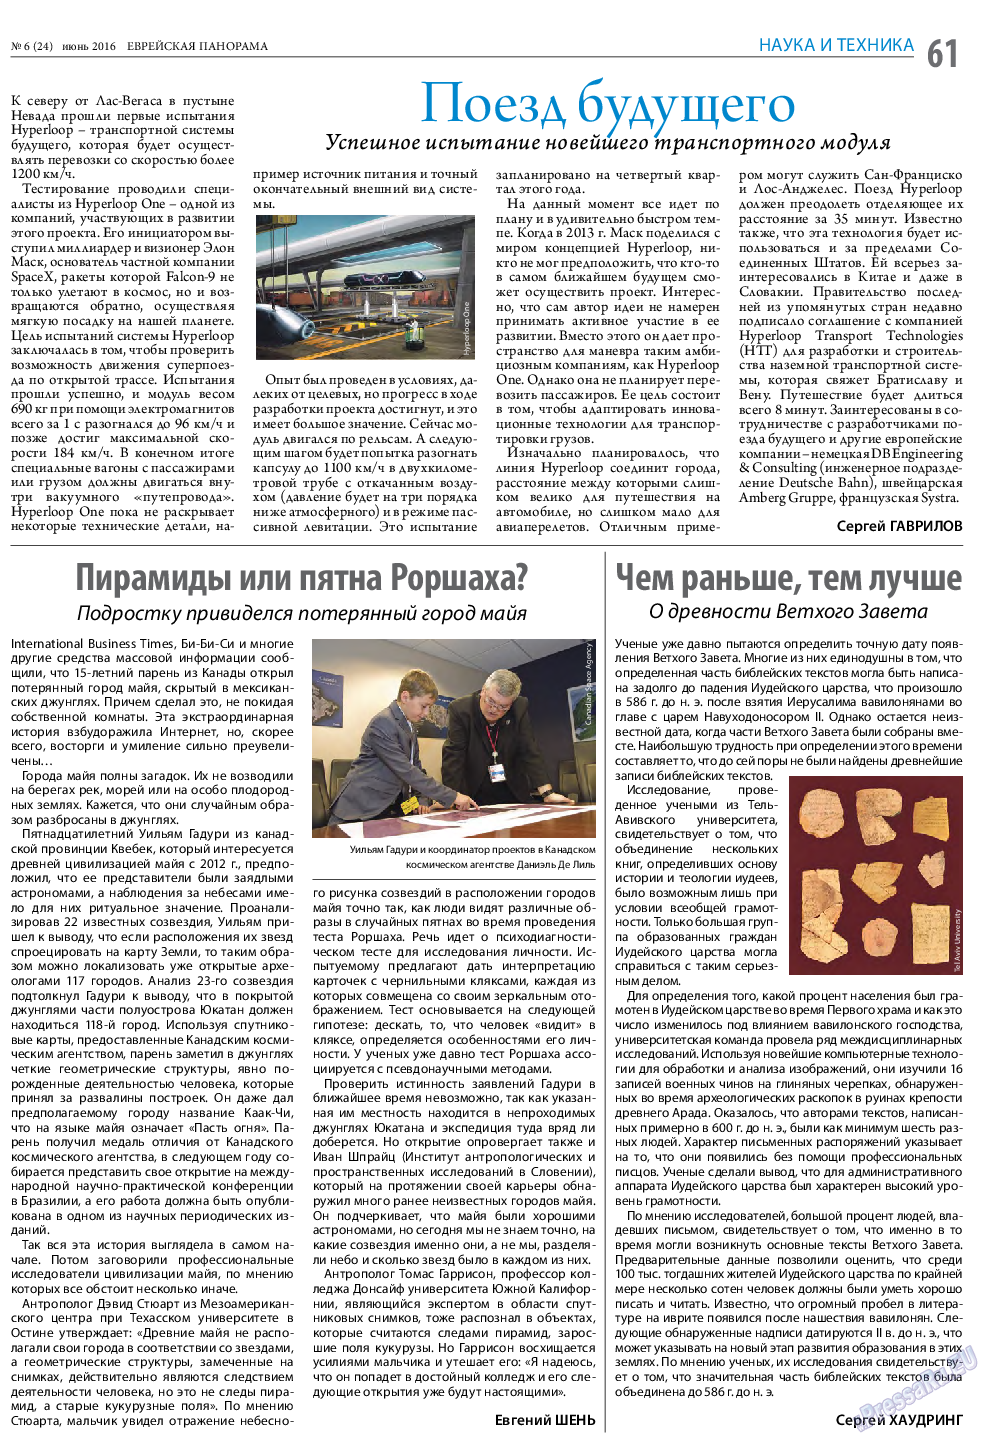 Еврейская панорама, газета. 2016 №6 стр.61